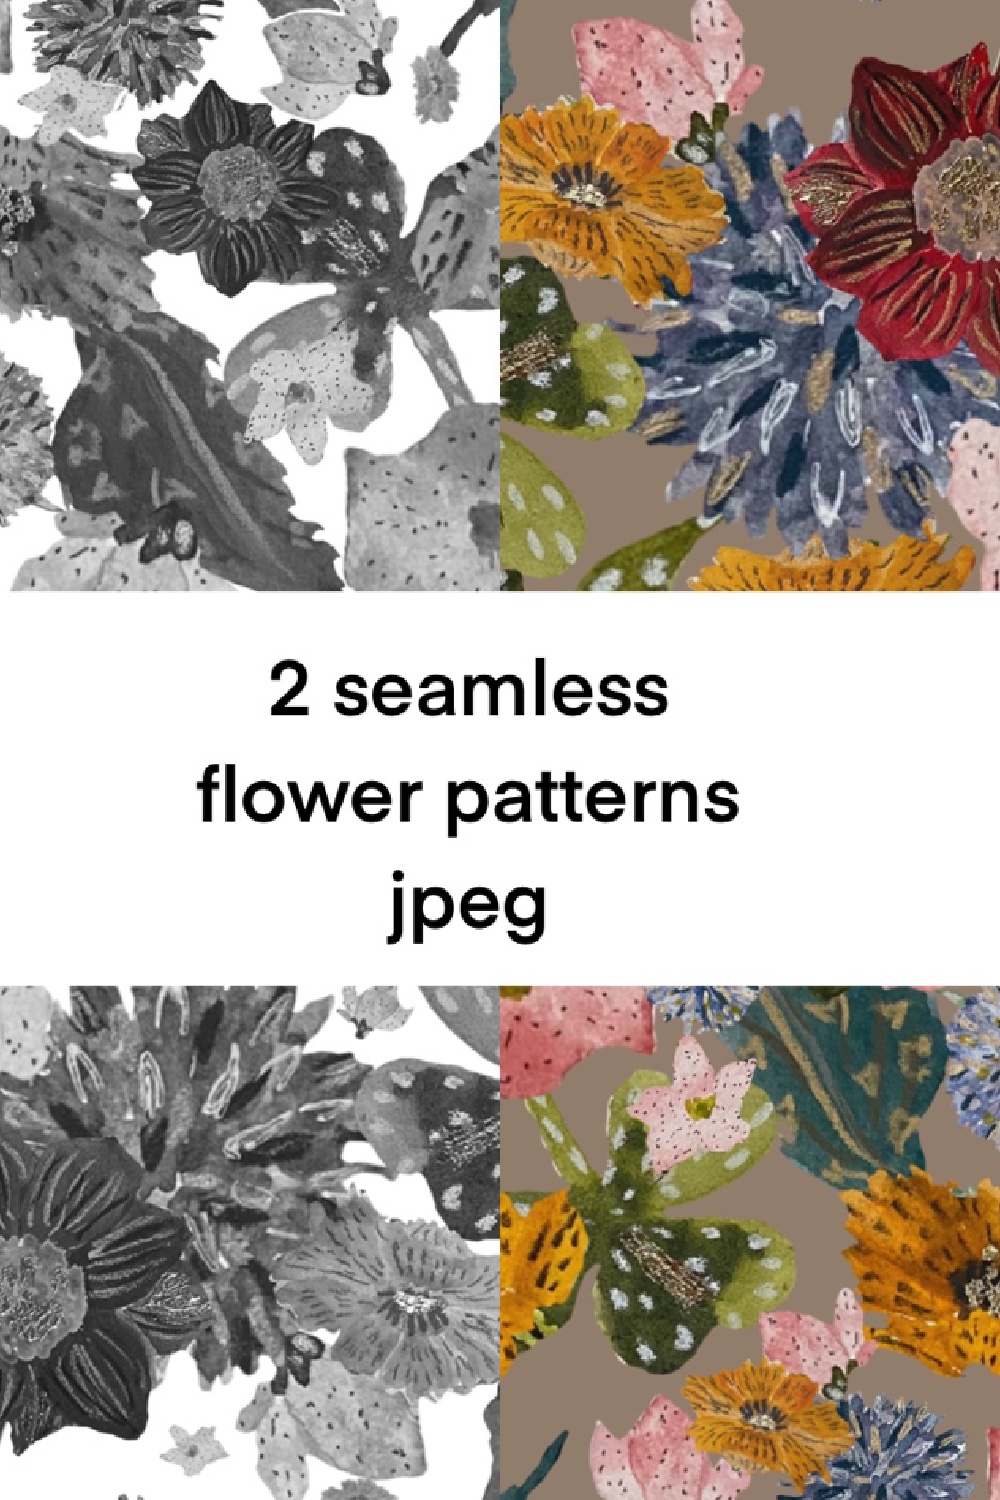 2 Seamless Flower Patterns JPEG pinterest image.